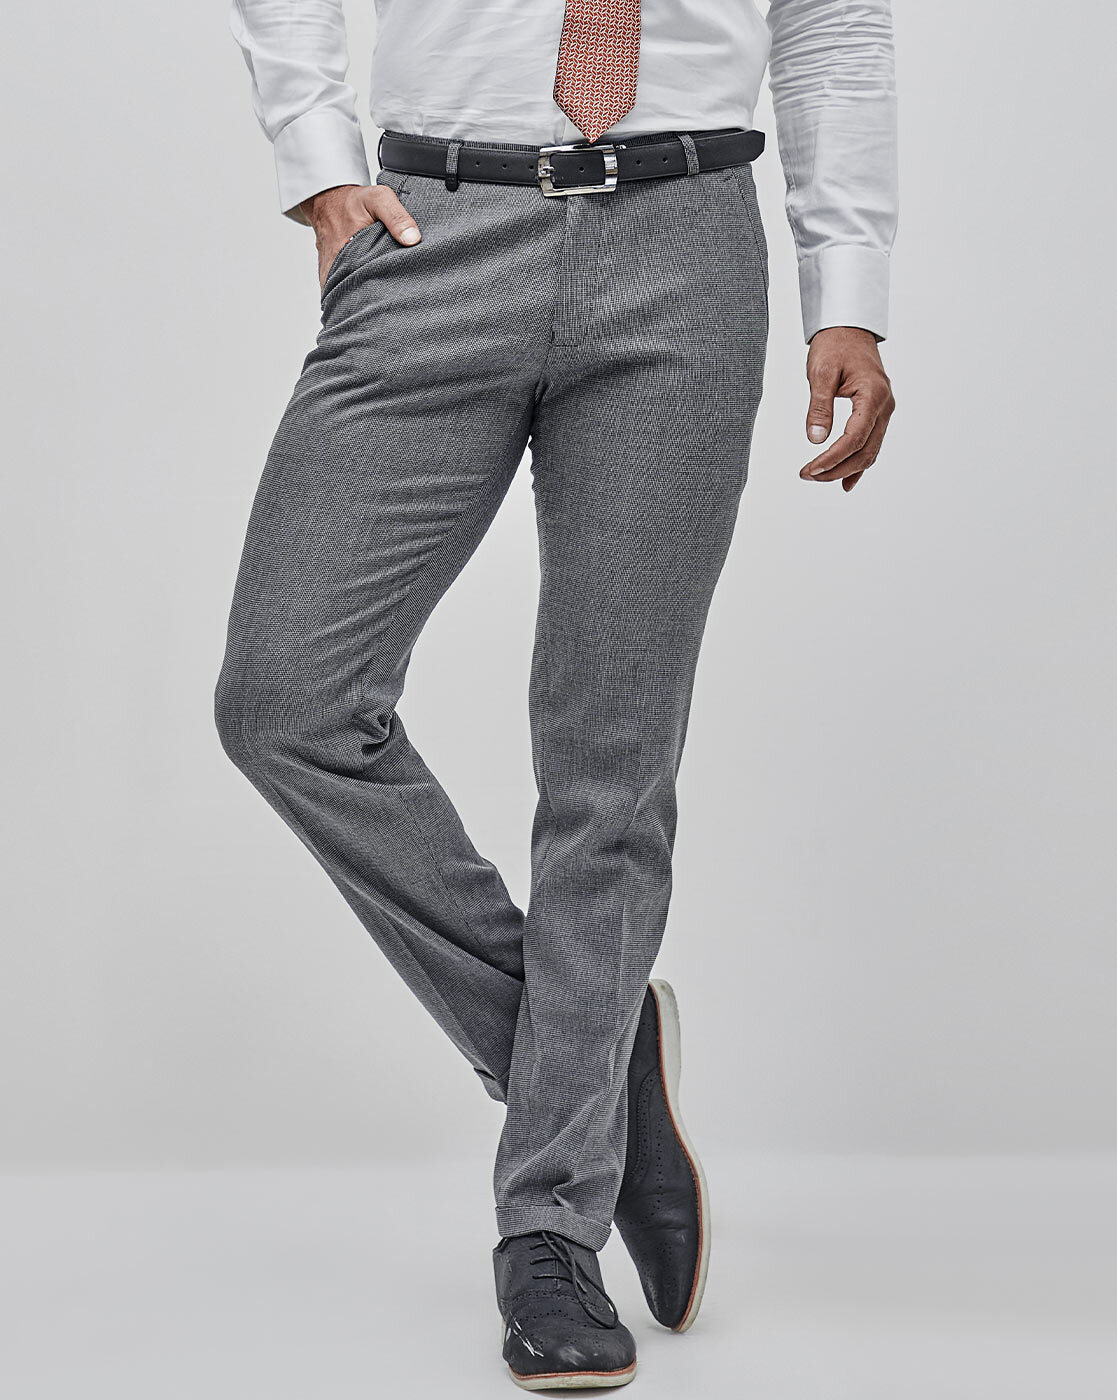 Buy Men Grey Slim Fit Solid Casual Trousers Online  816914  Allen Solly